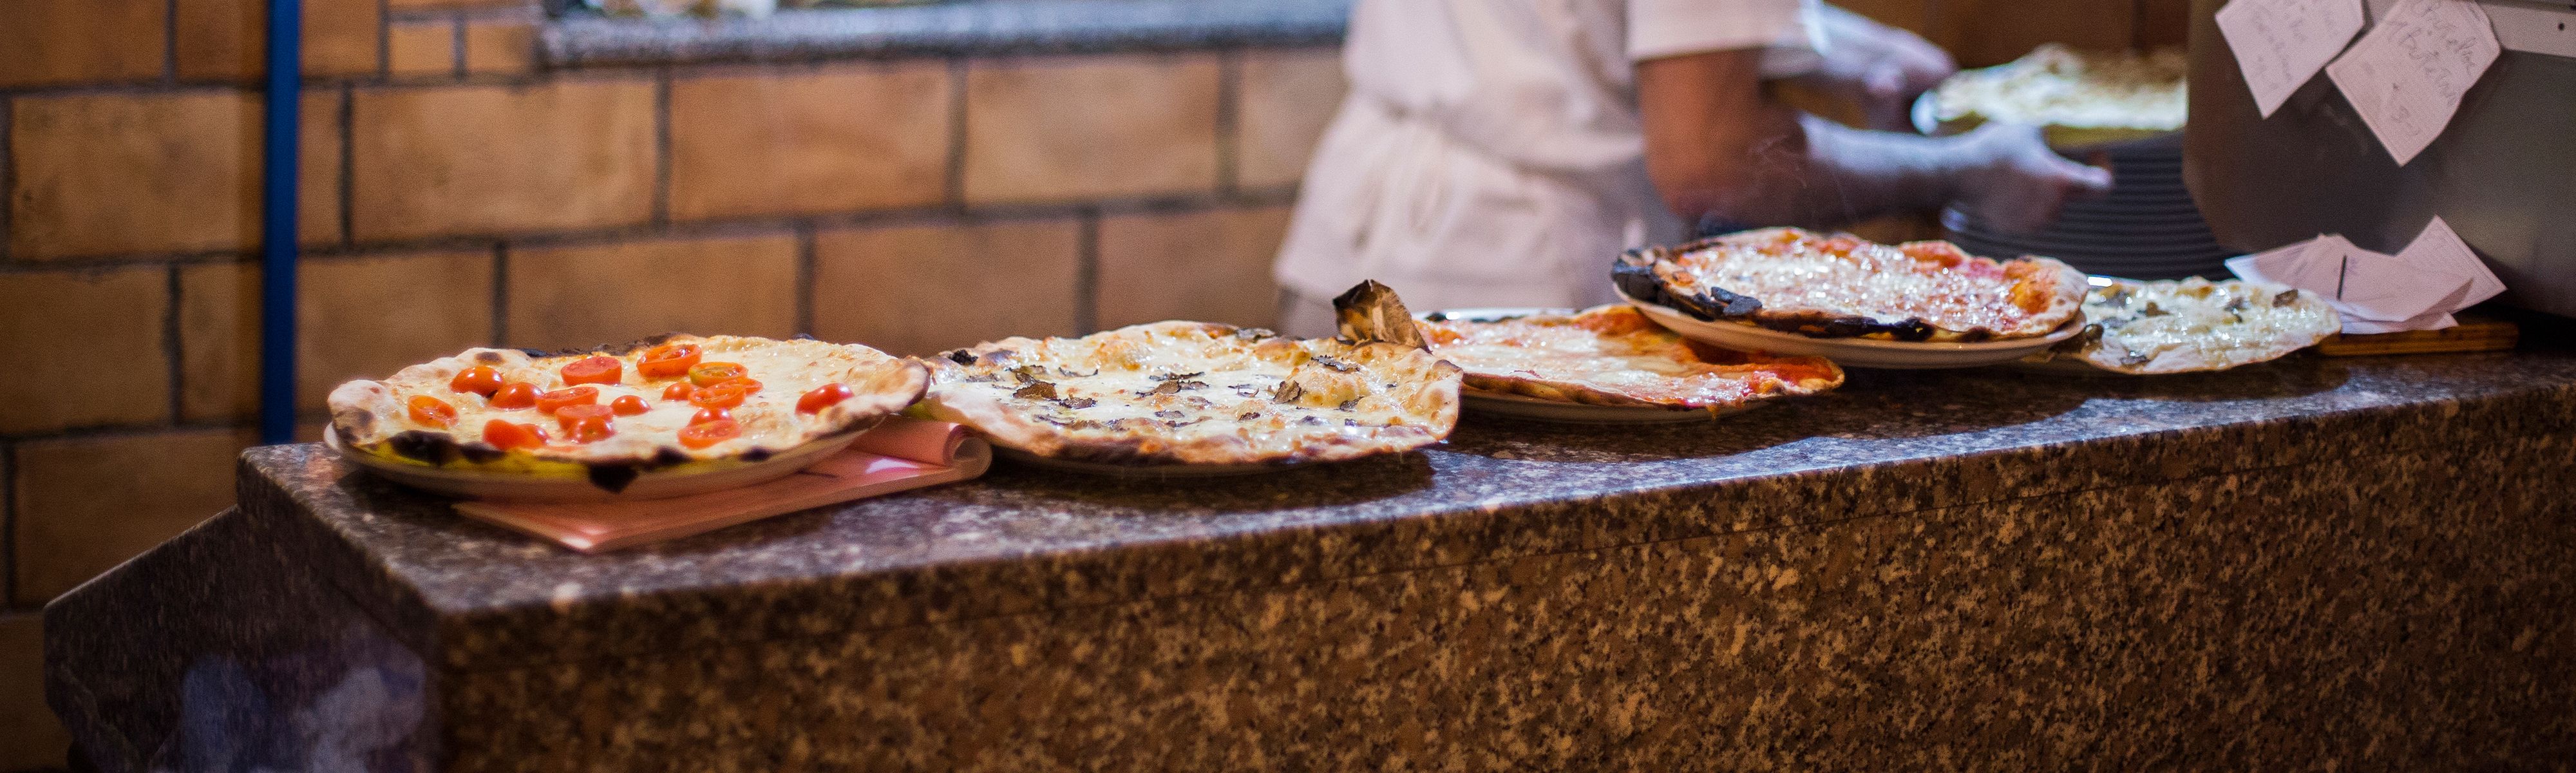 five italian pizzas on a granite shelf in a kitchen